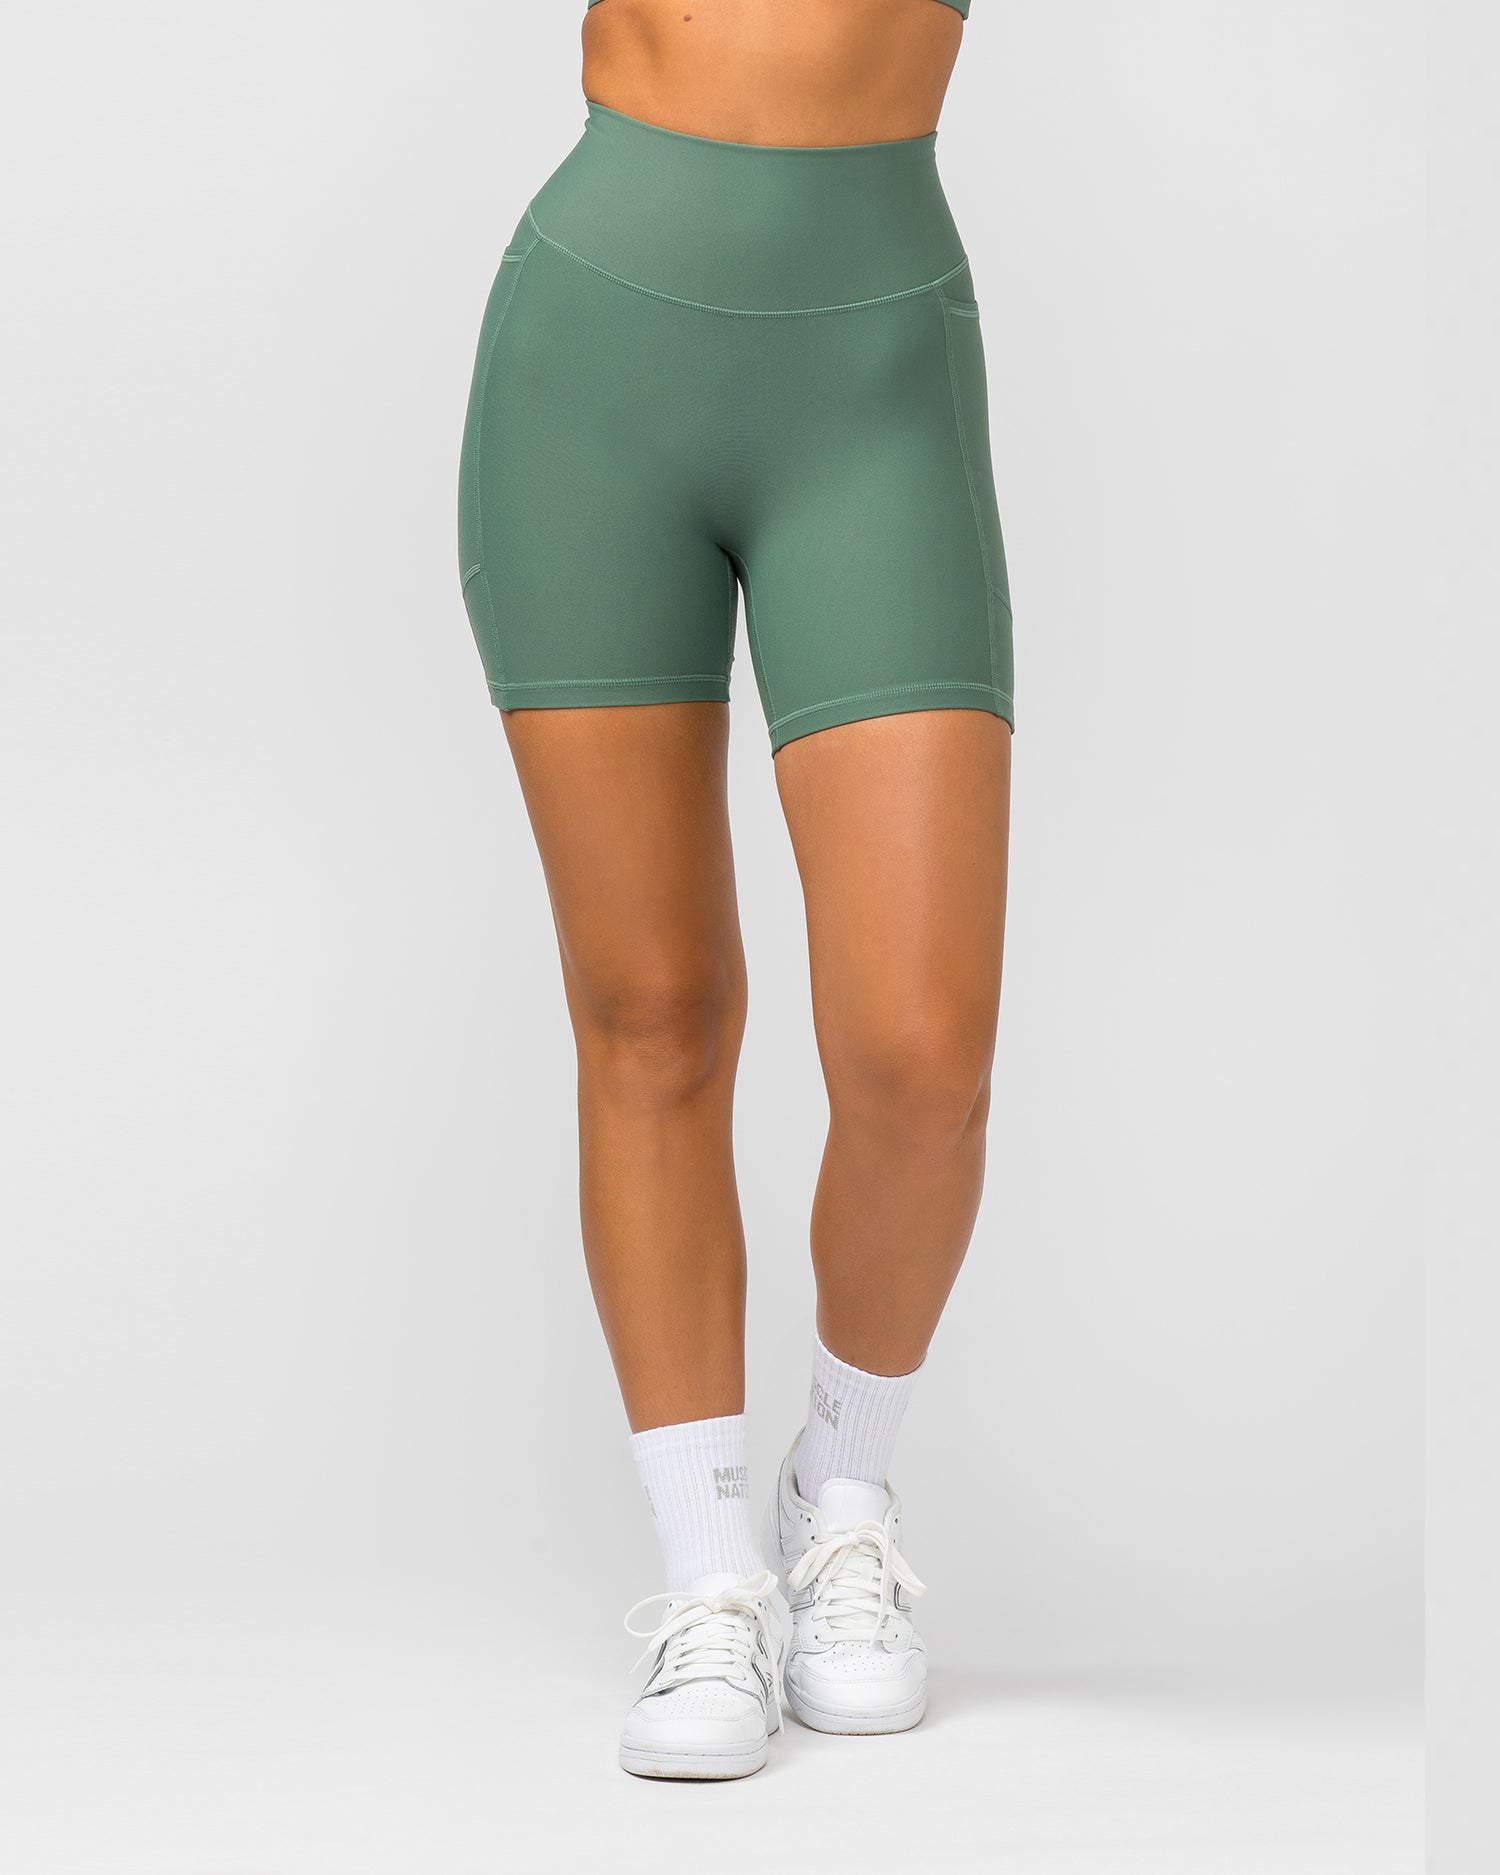 Agility Pocket Bike Shorts - Mineral Green